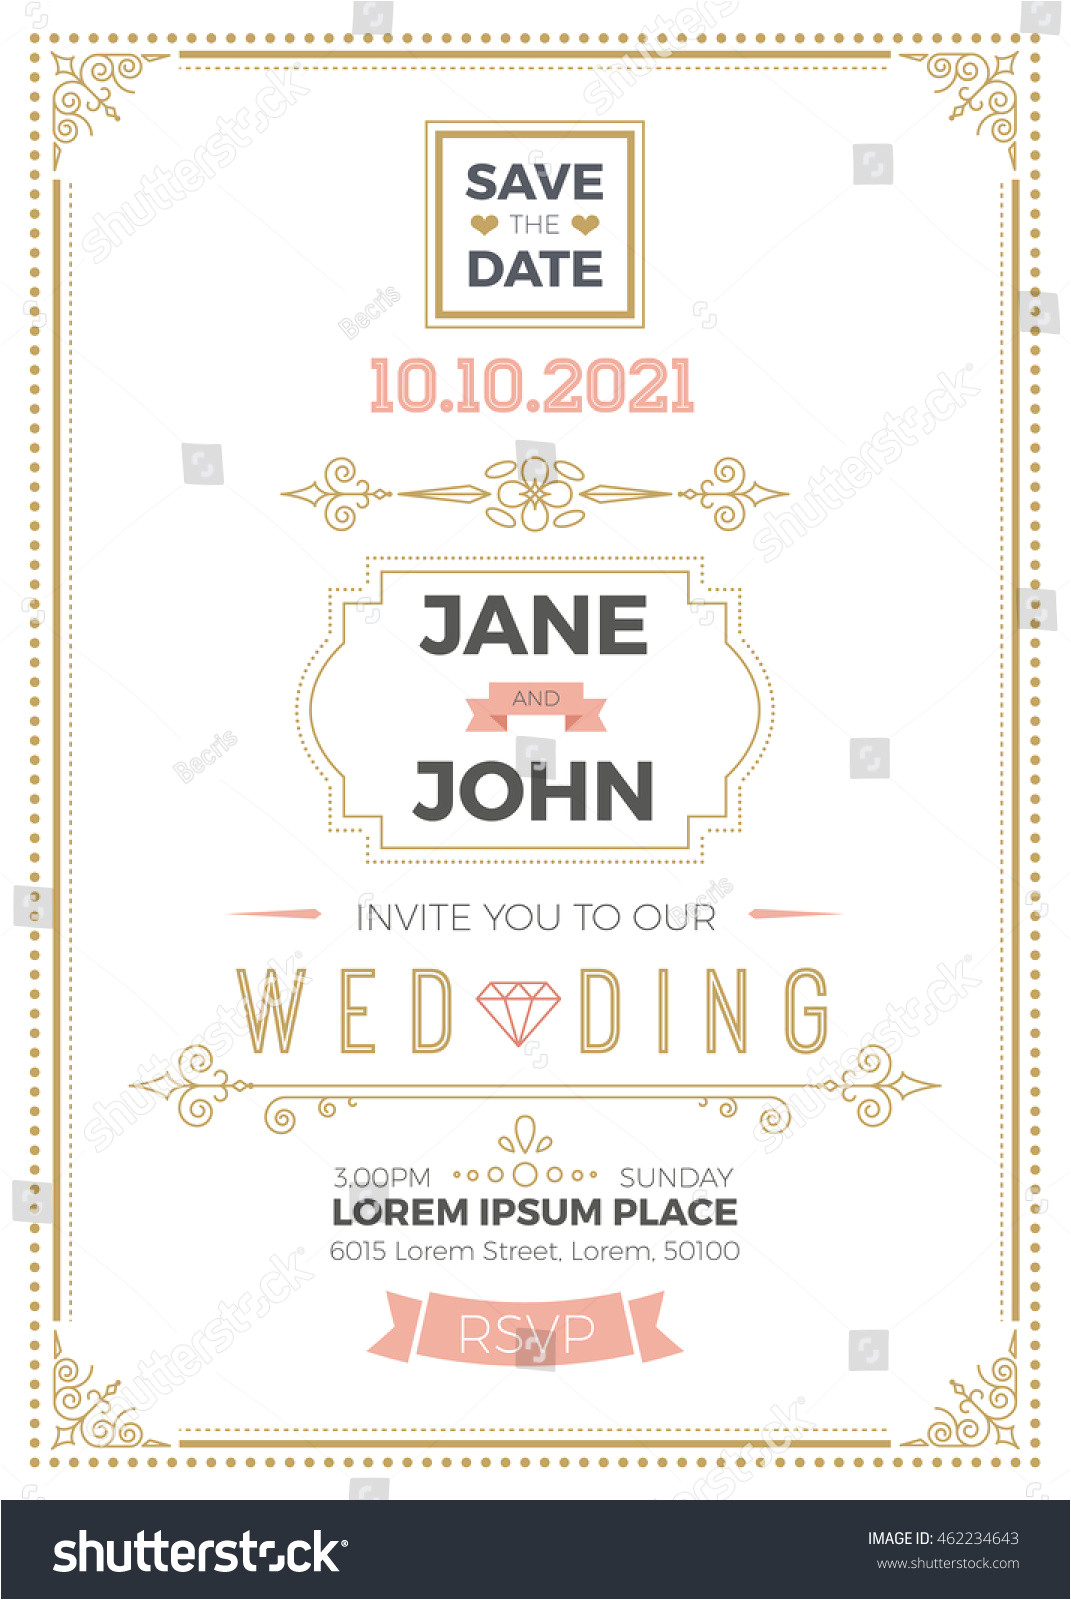 vintage wedding invitation card a5 template 462234643